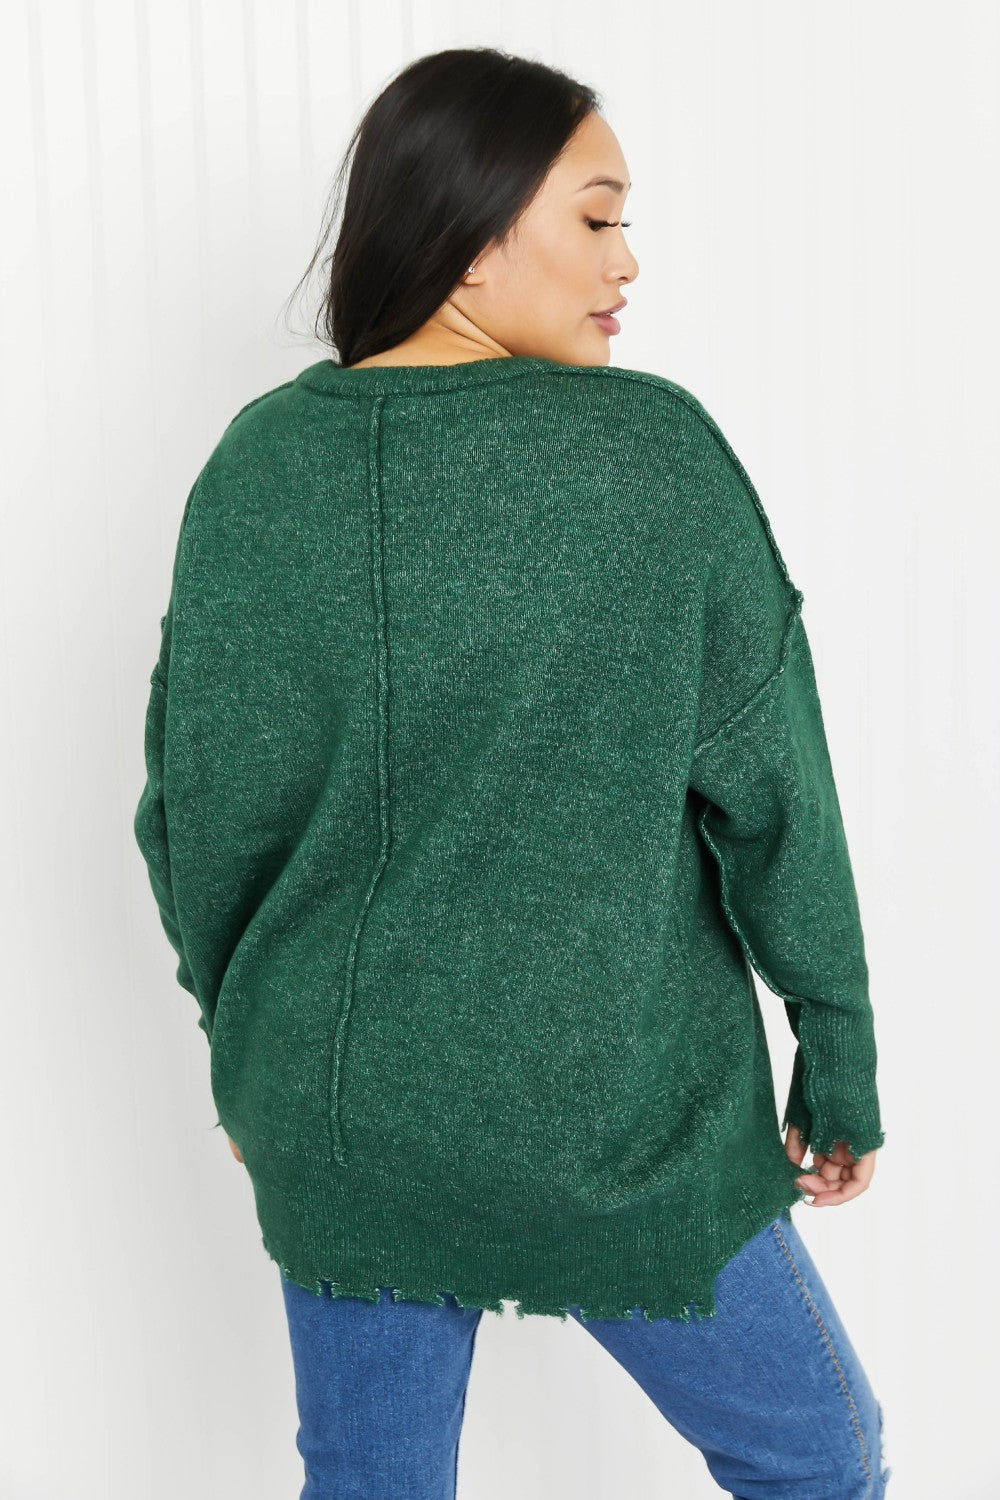 Pine Views Distressed Melange Sweater